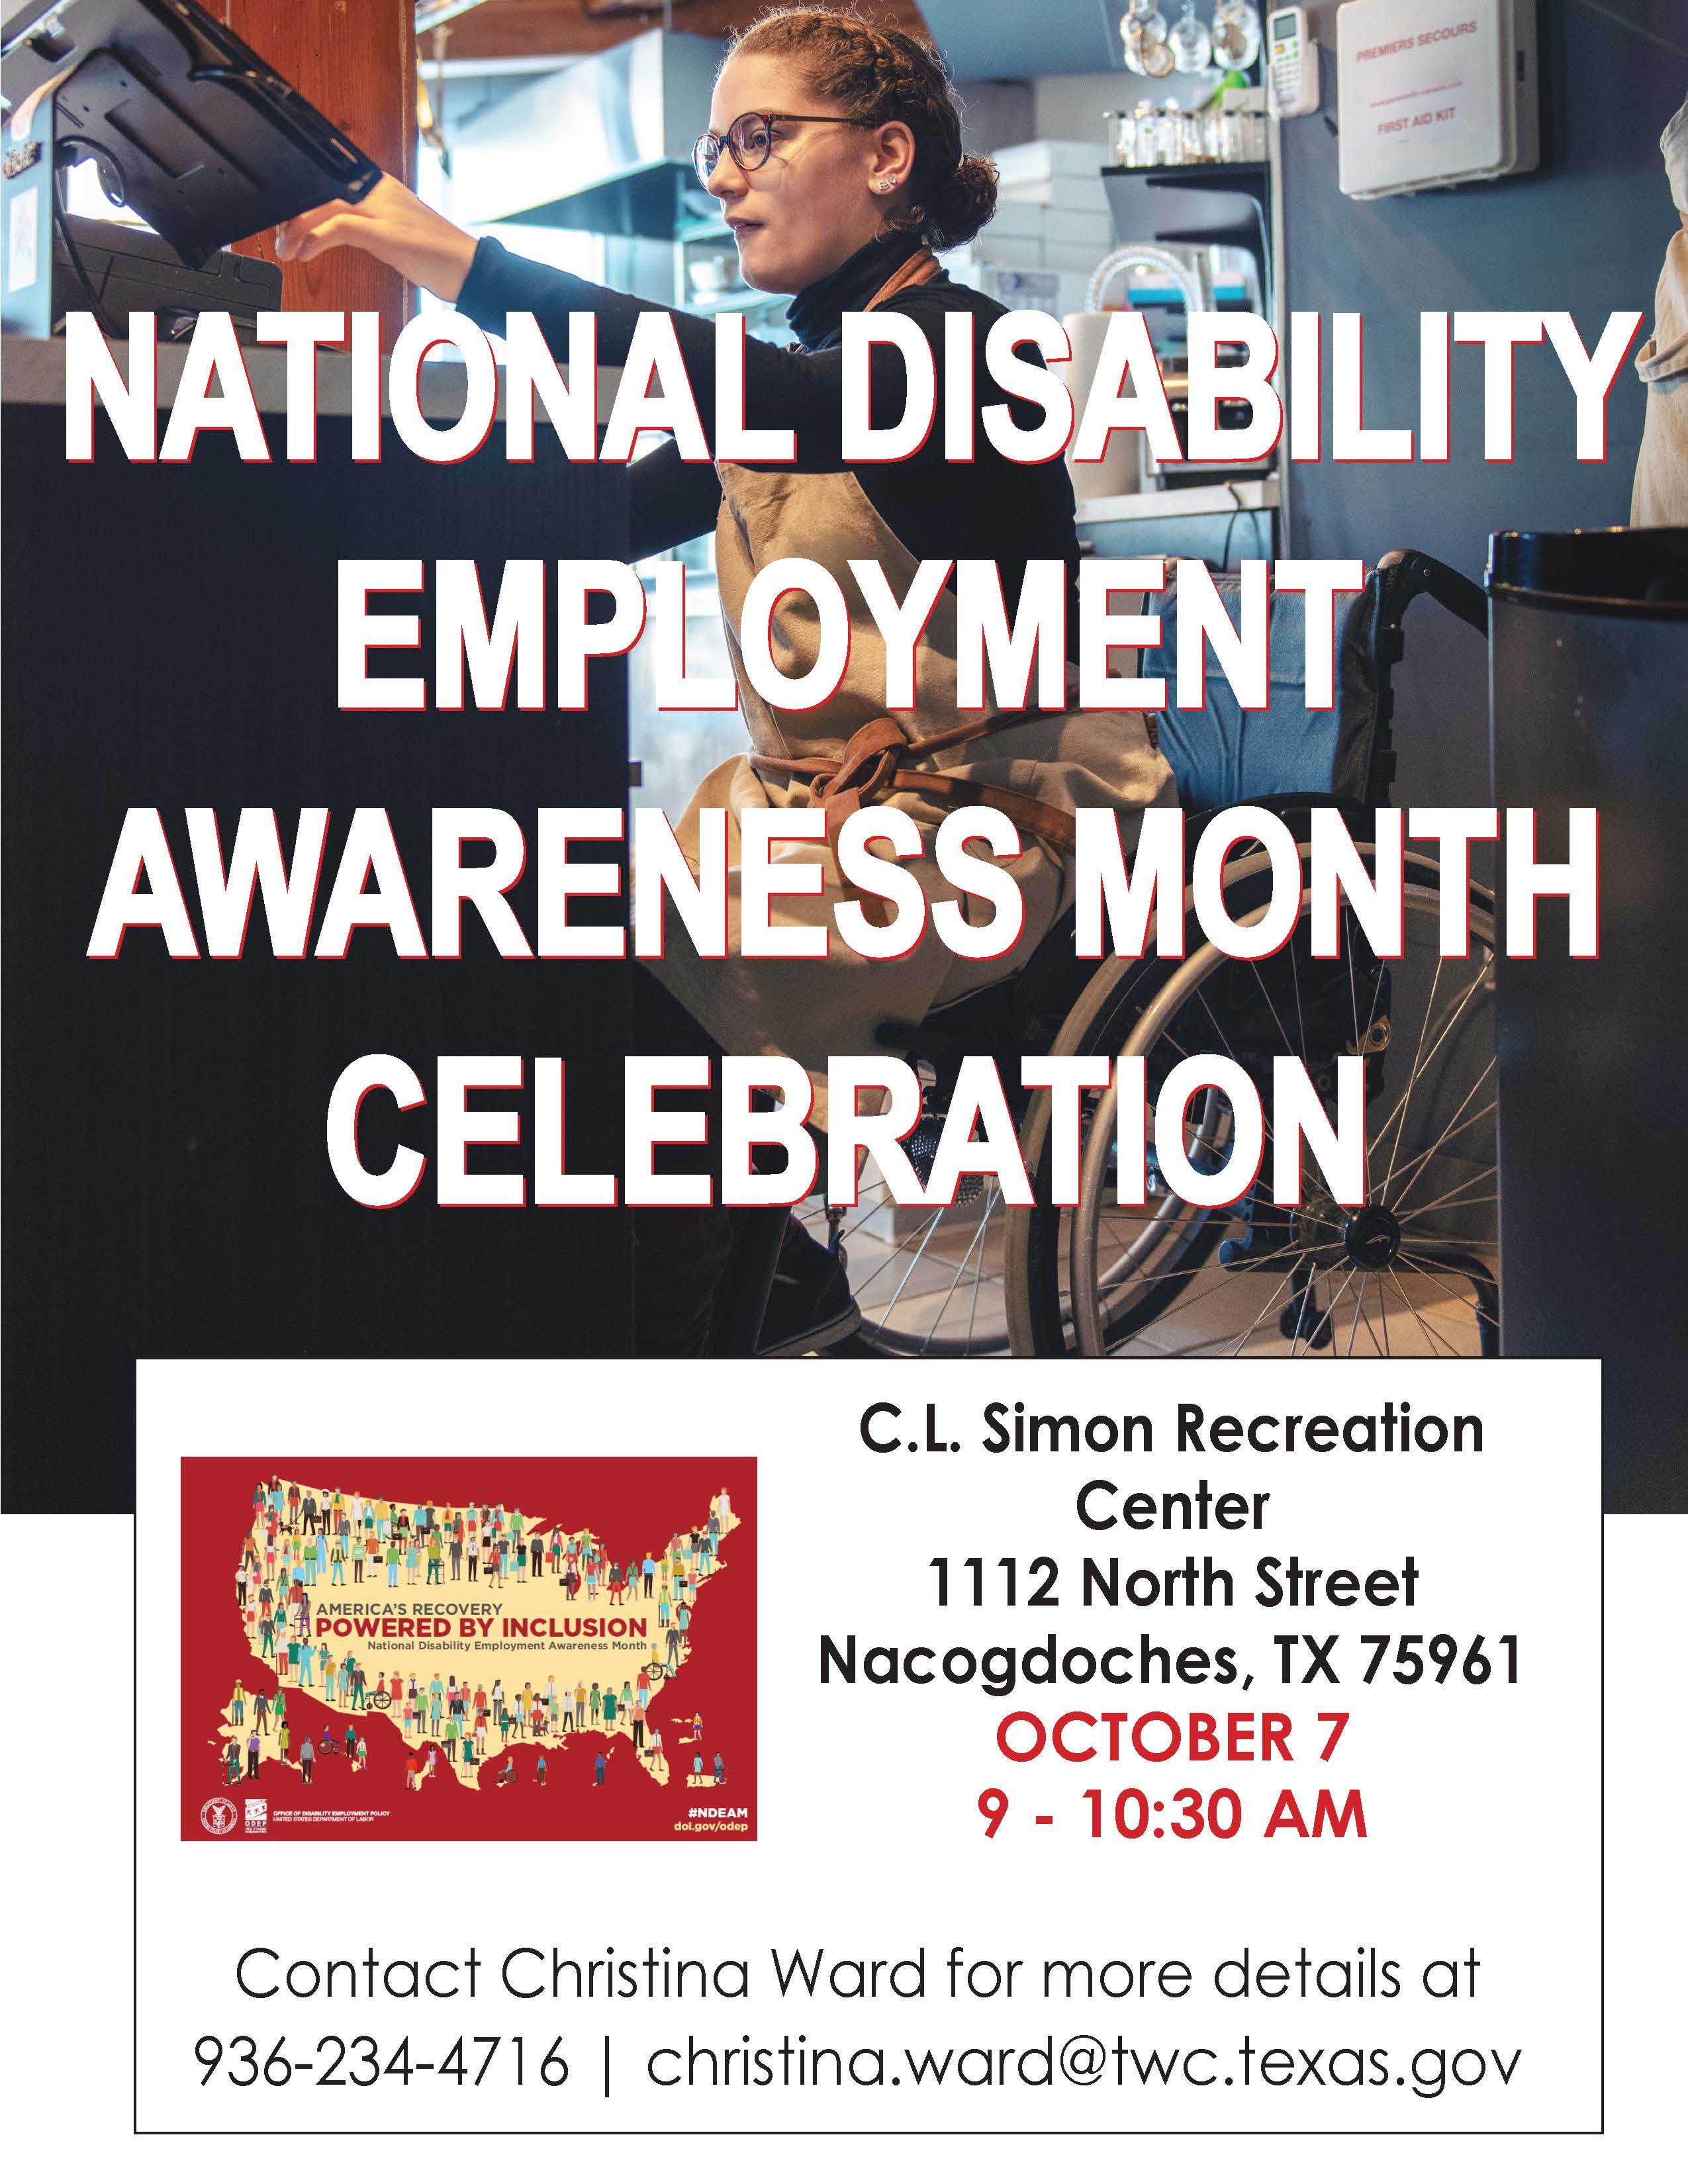 National Disability Employment Awareness Month Celebration